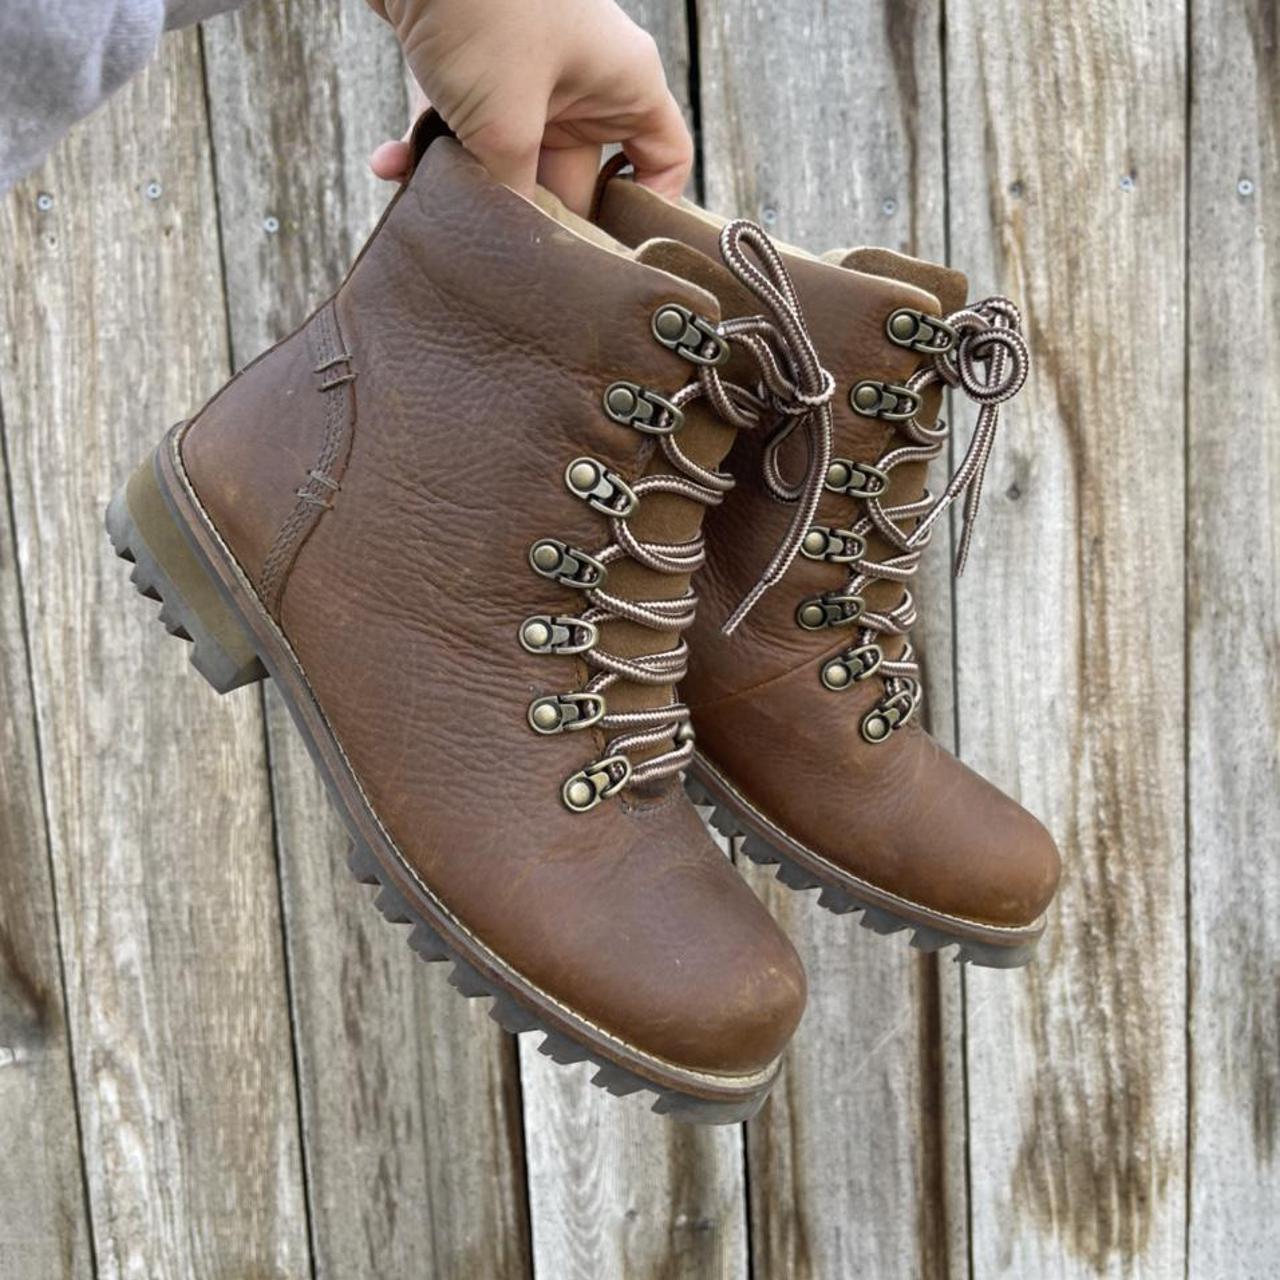 Product Image 1 - Kodiak leather insulated waterproof boots!